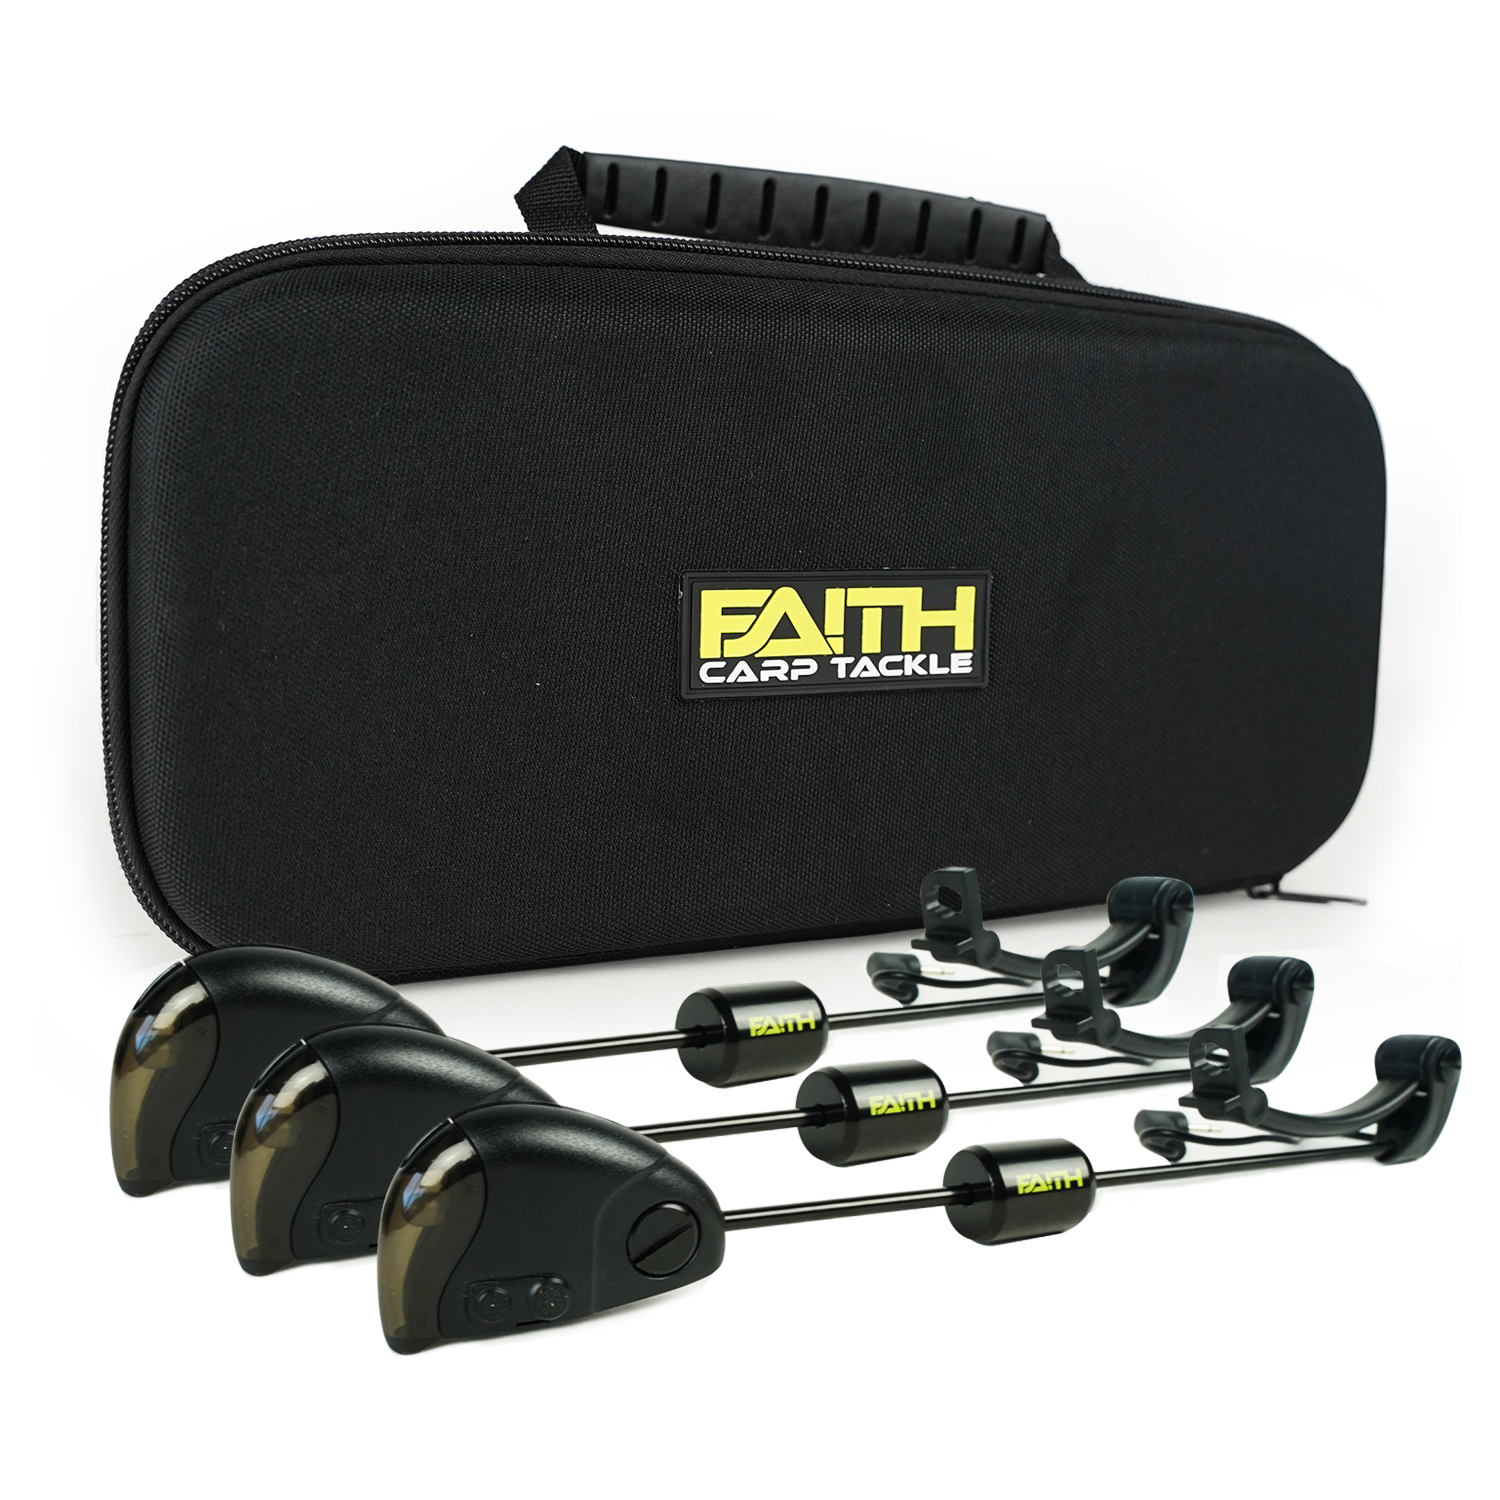 Faith SW-3 Multi-Swinger-Set | 3 Stück | Mehrfarben